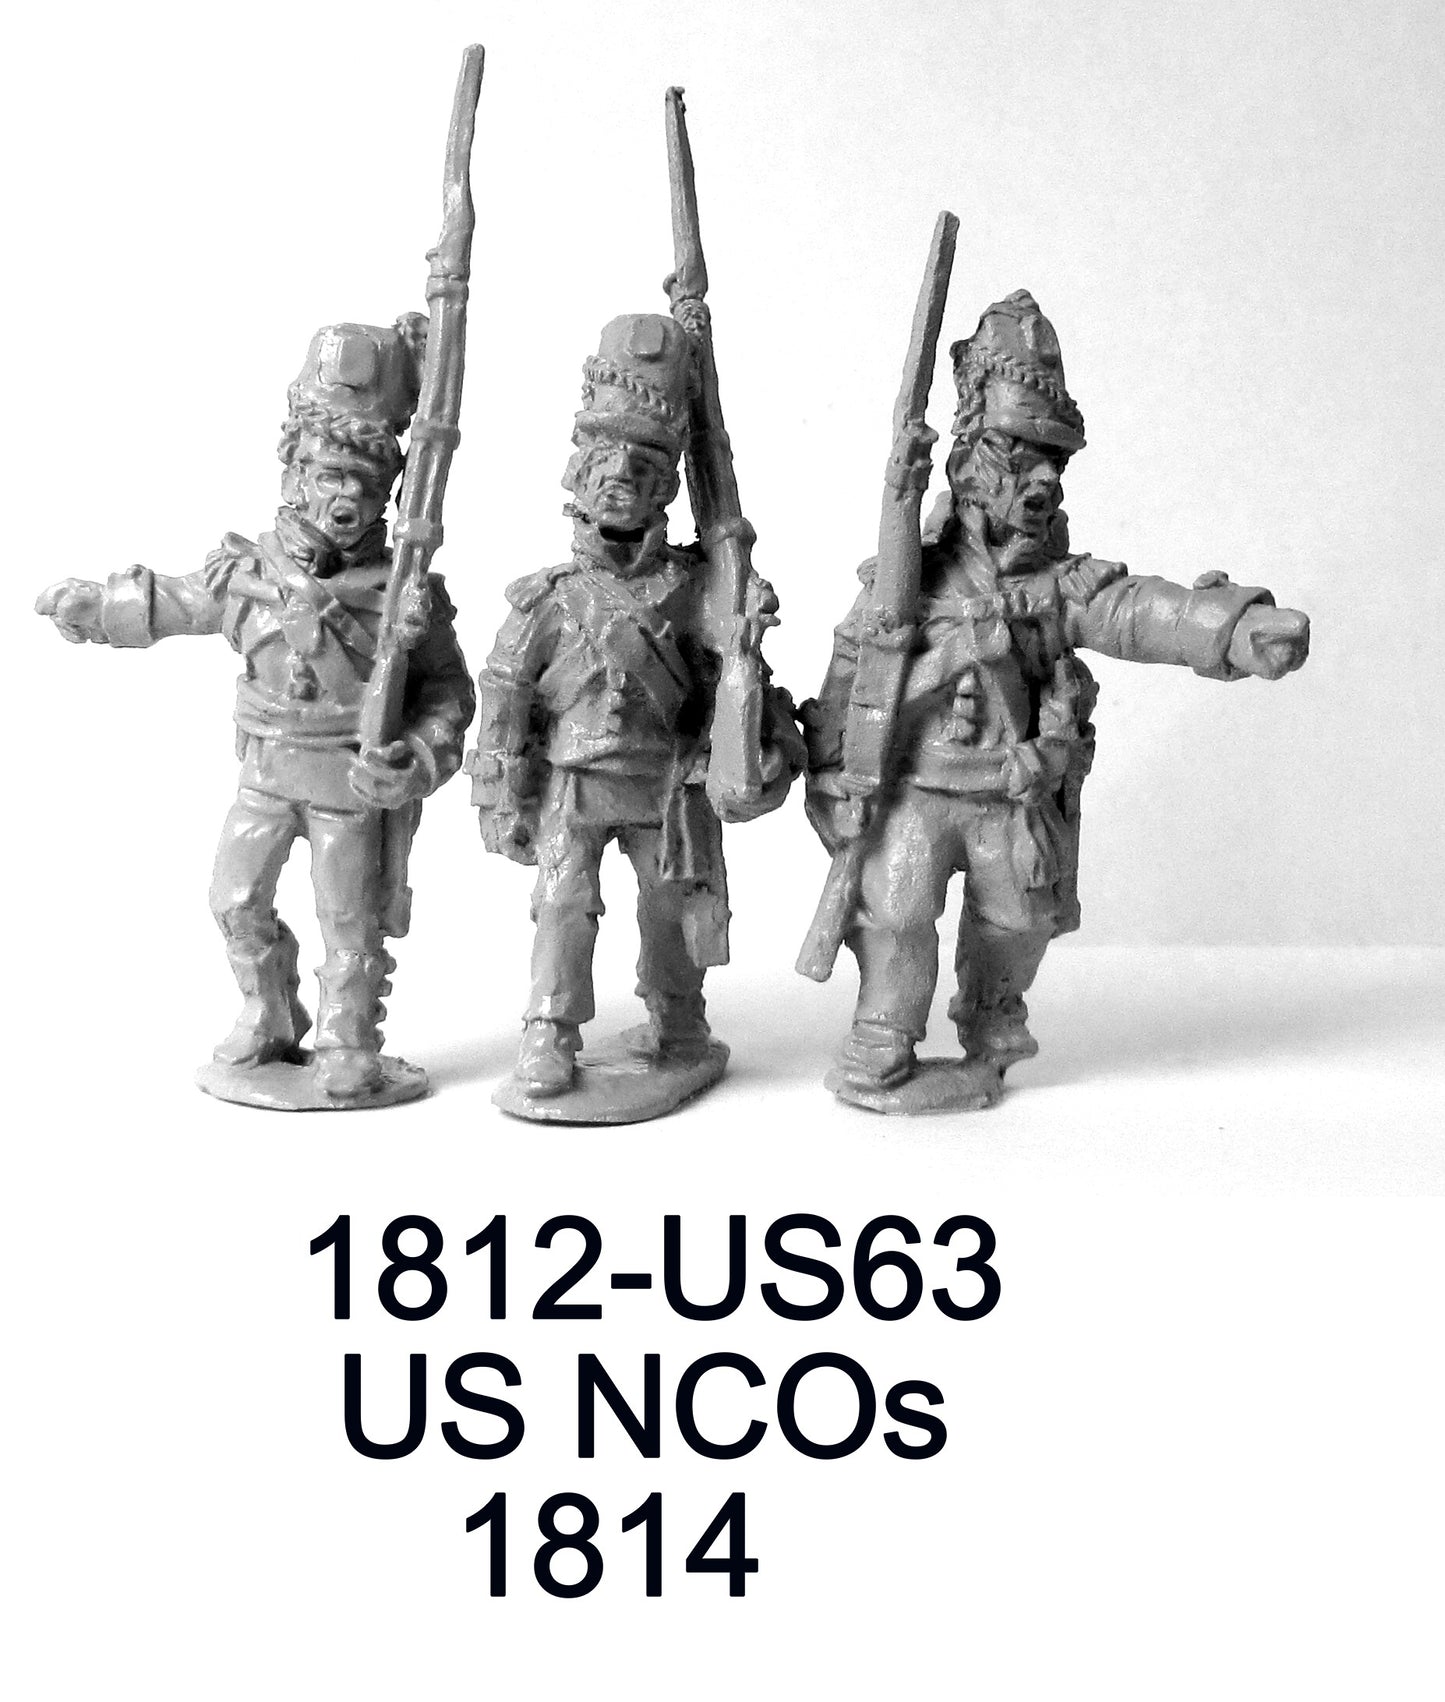 US NCOs 1814